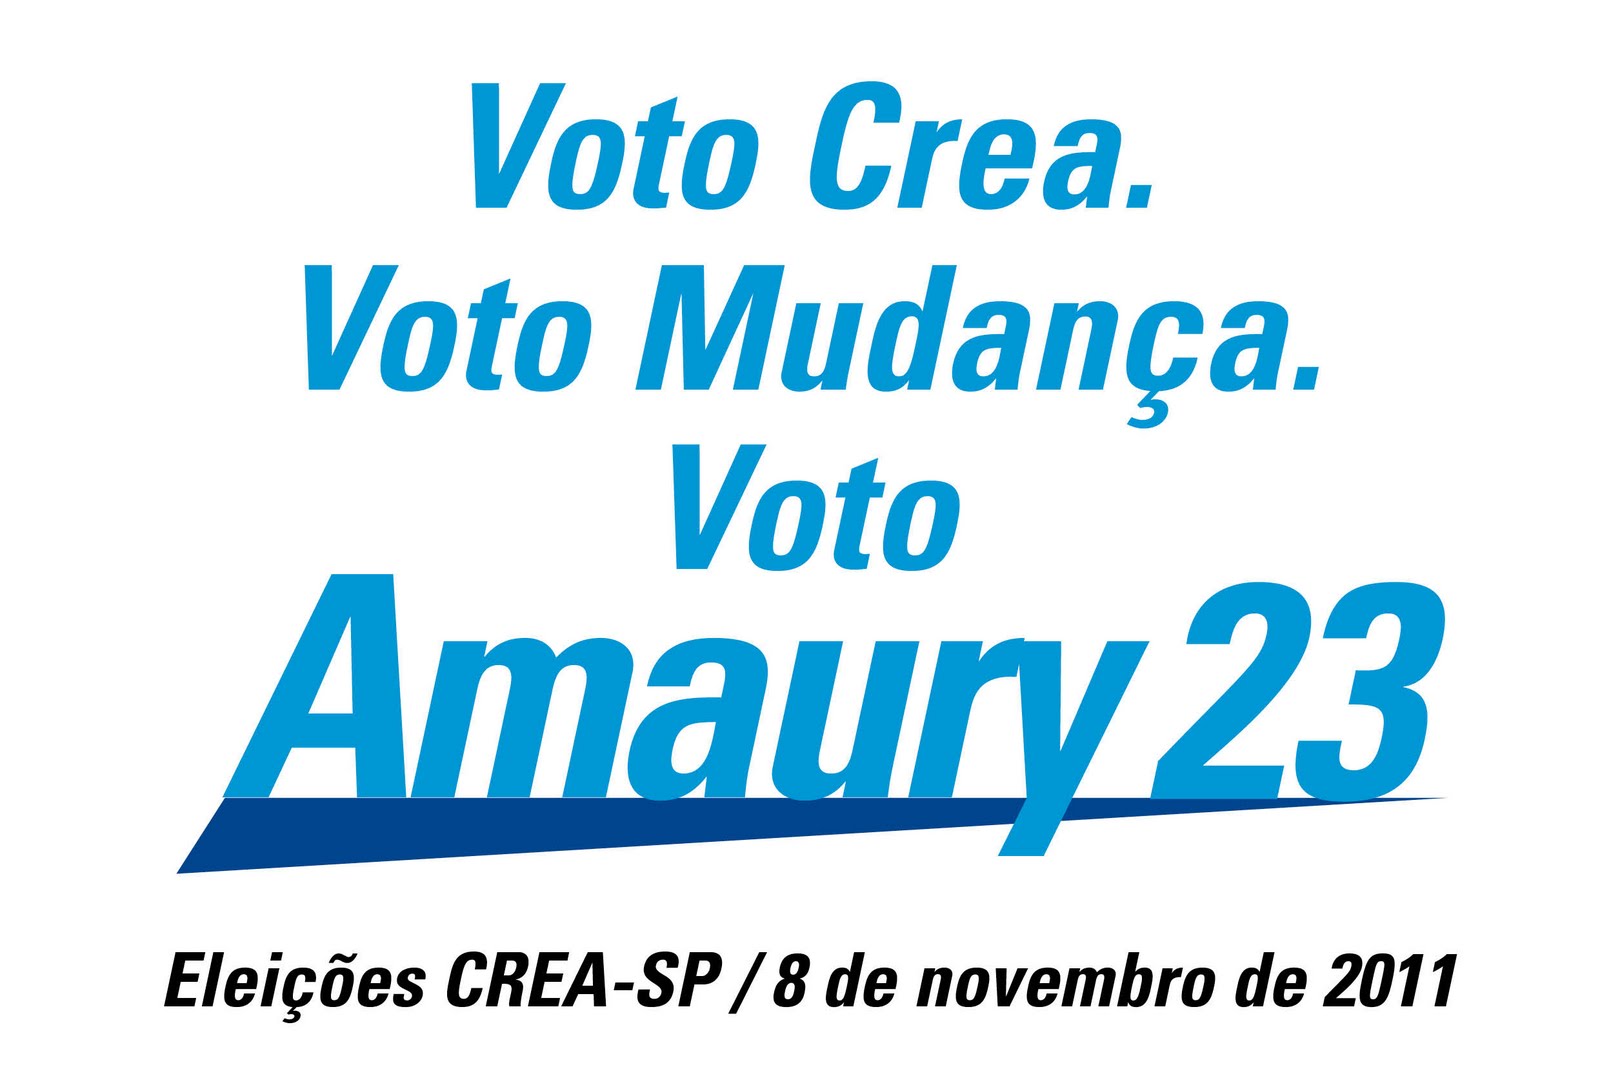 Voto CREA! Voto Mudança! Voto Amaury!